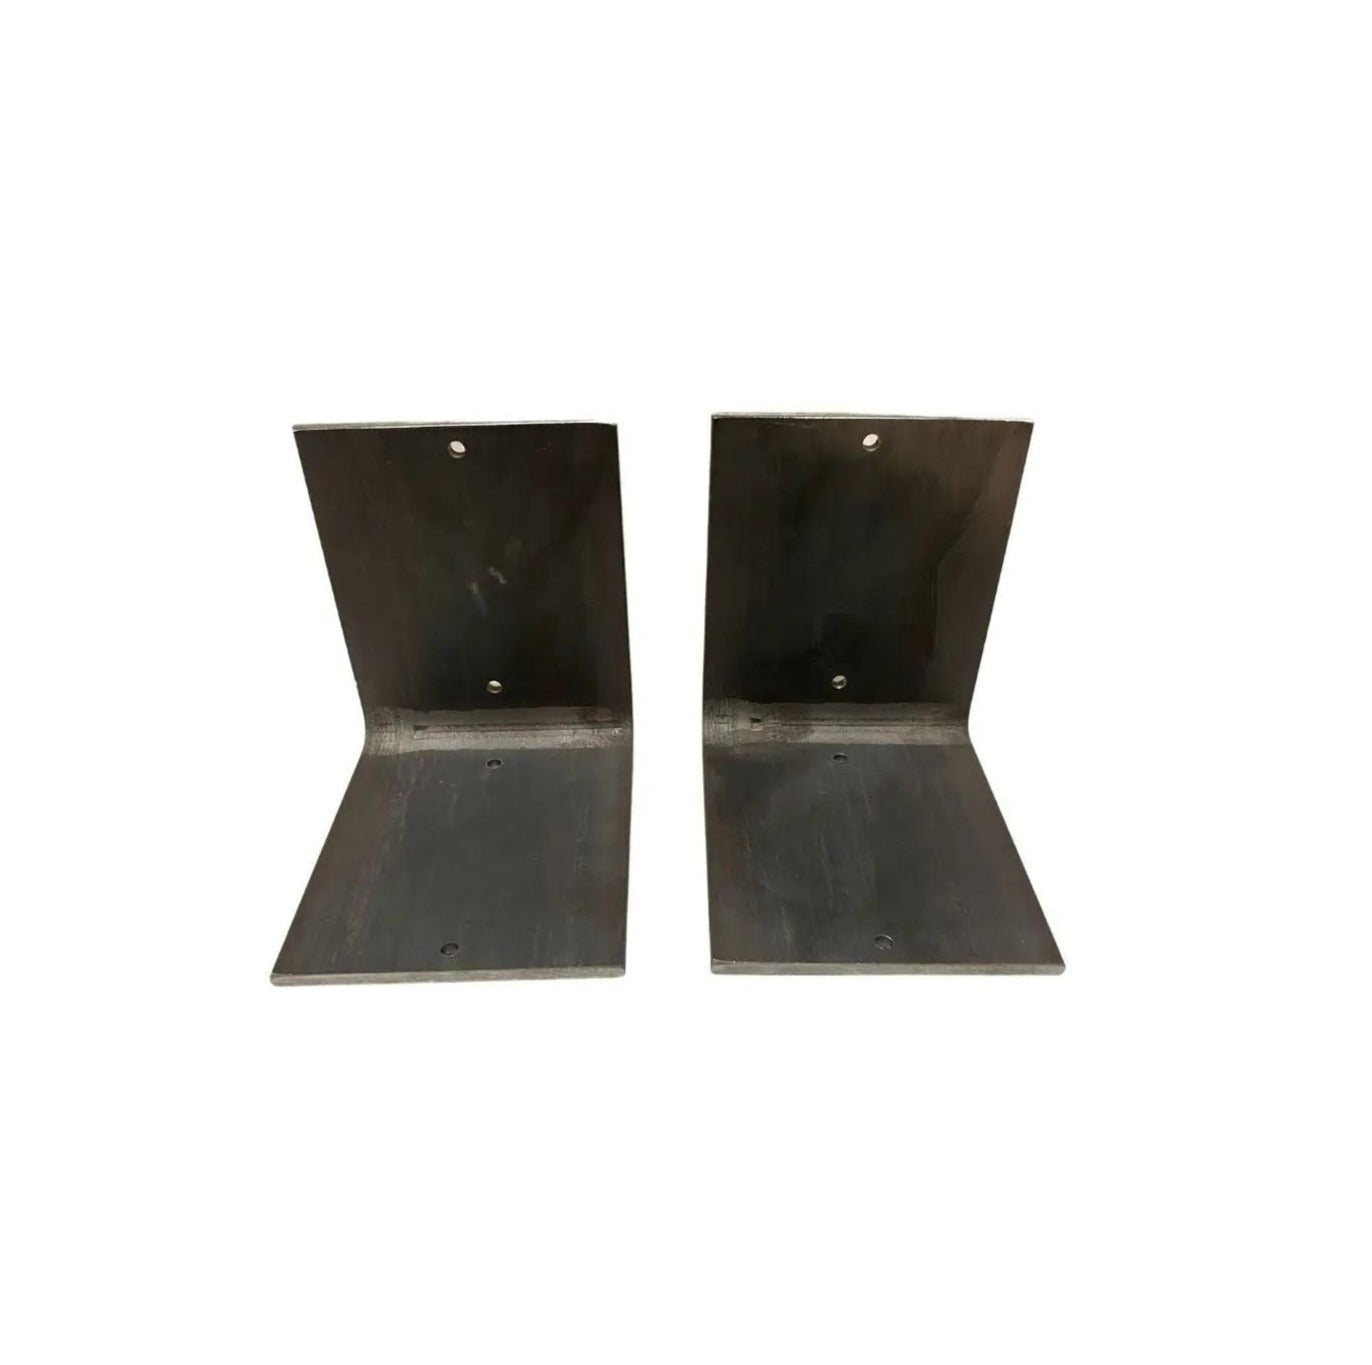 The Lyons Style L Shelf Bracket Shelf Support 4" Depth x 4" Wall Mount Length Finish Black Powder Coat | Industrial Farm Co